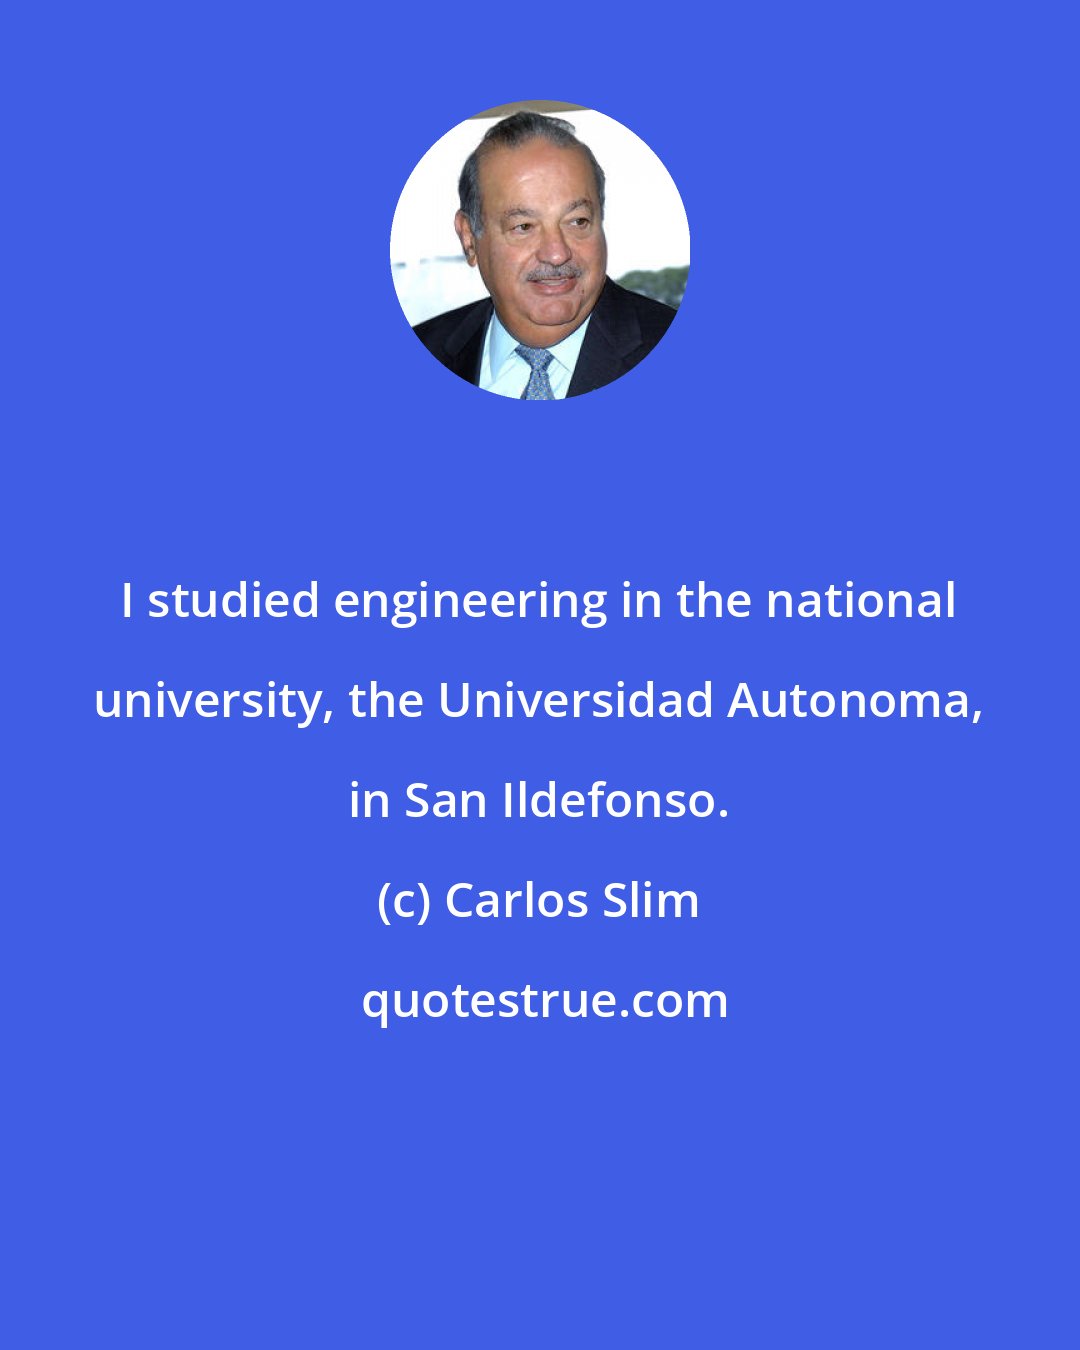 Carlos Slim: I studied engineering in the national university, the Universidad Autonoma, in San Ildefonso.